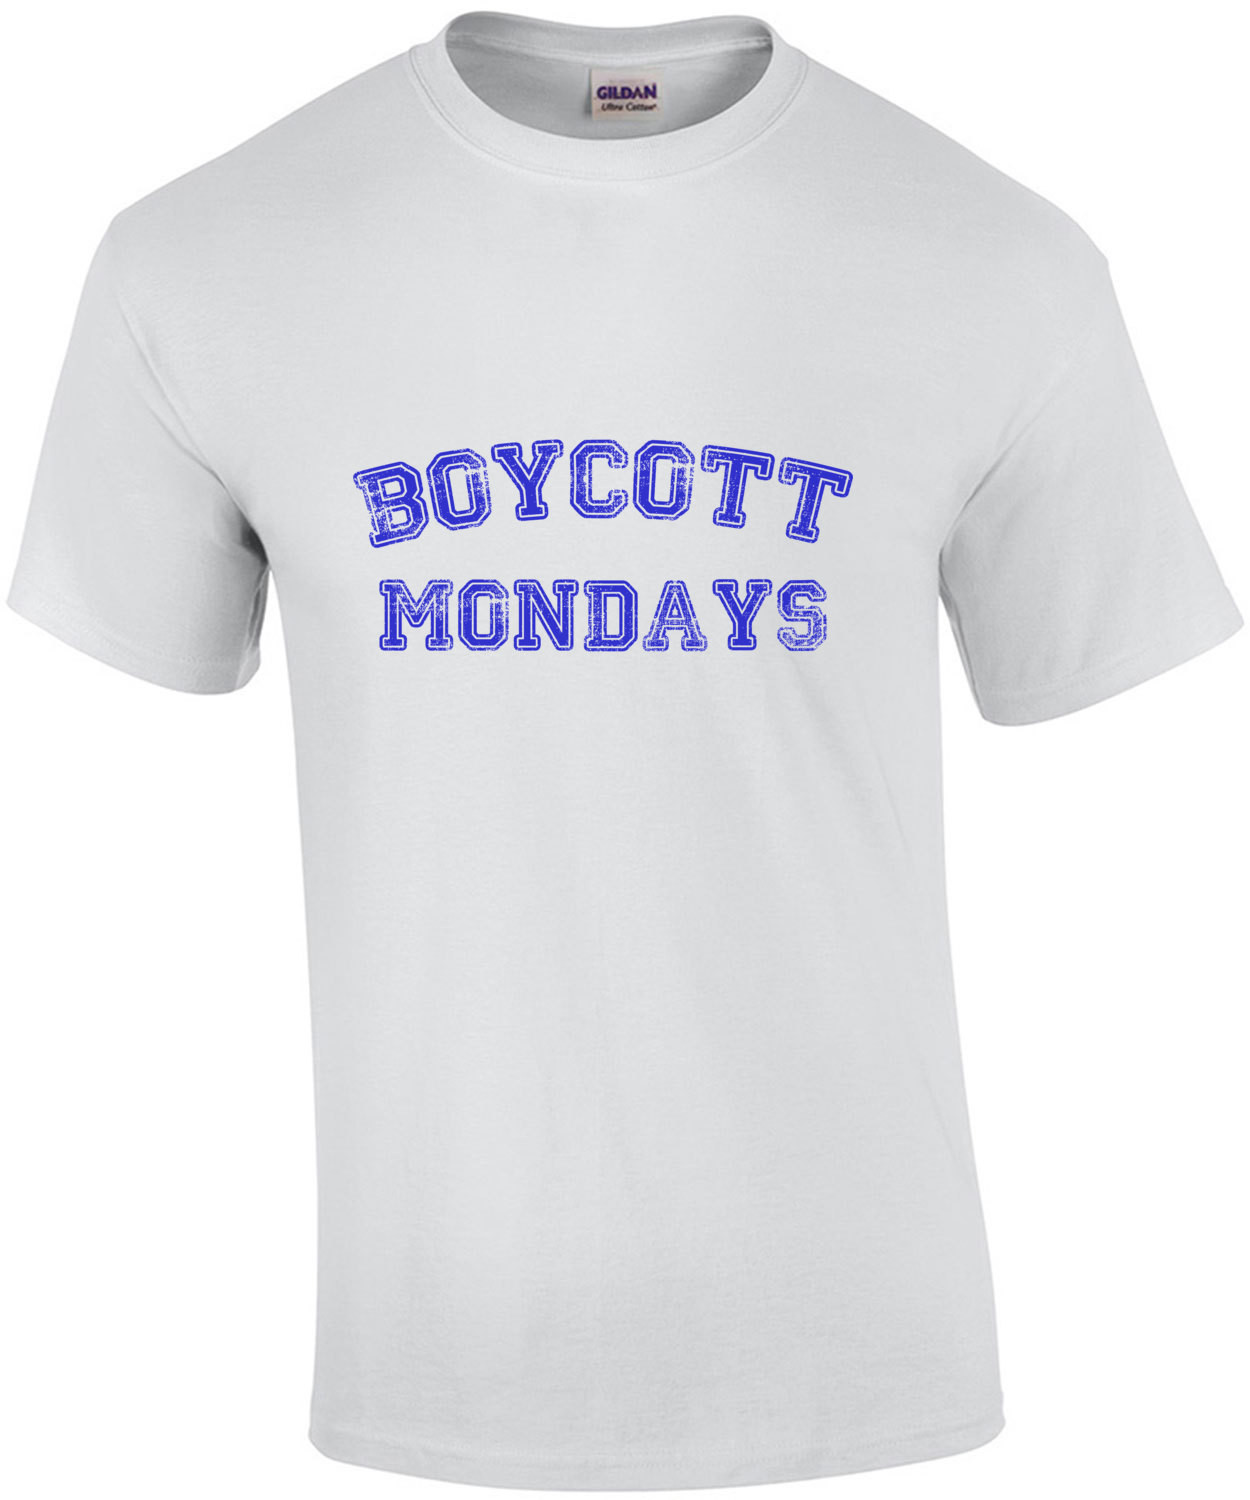 Boycott Mondays - Funny work t-shirt